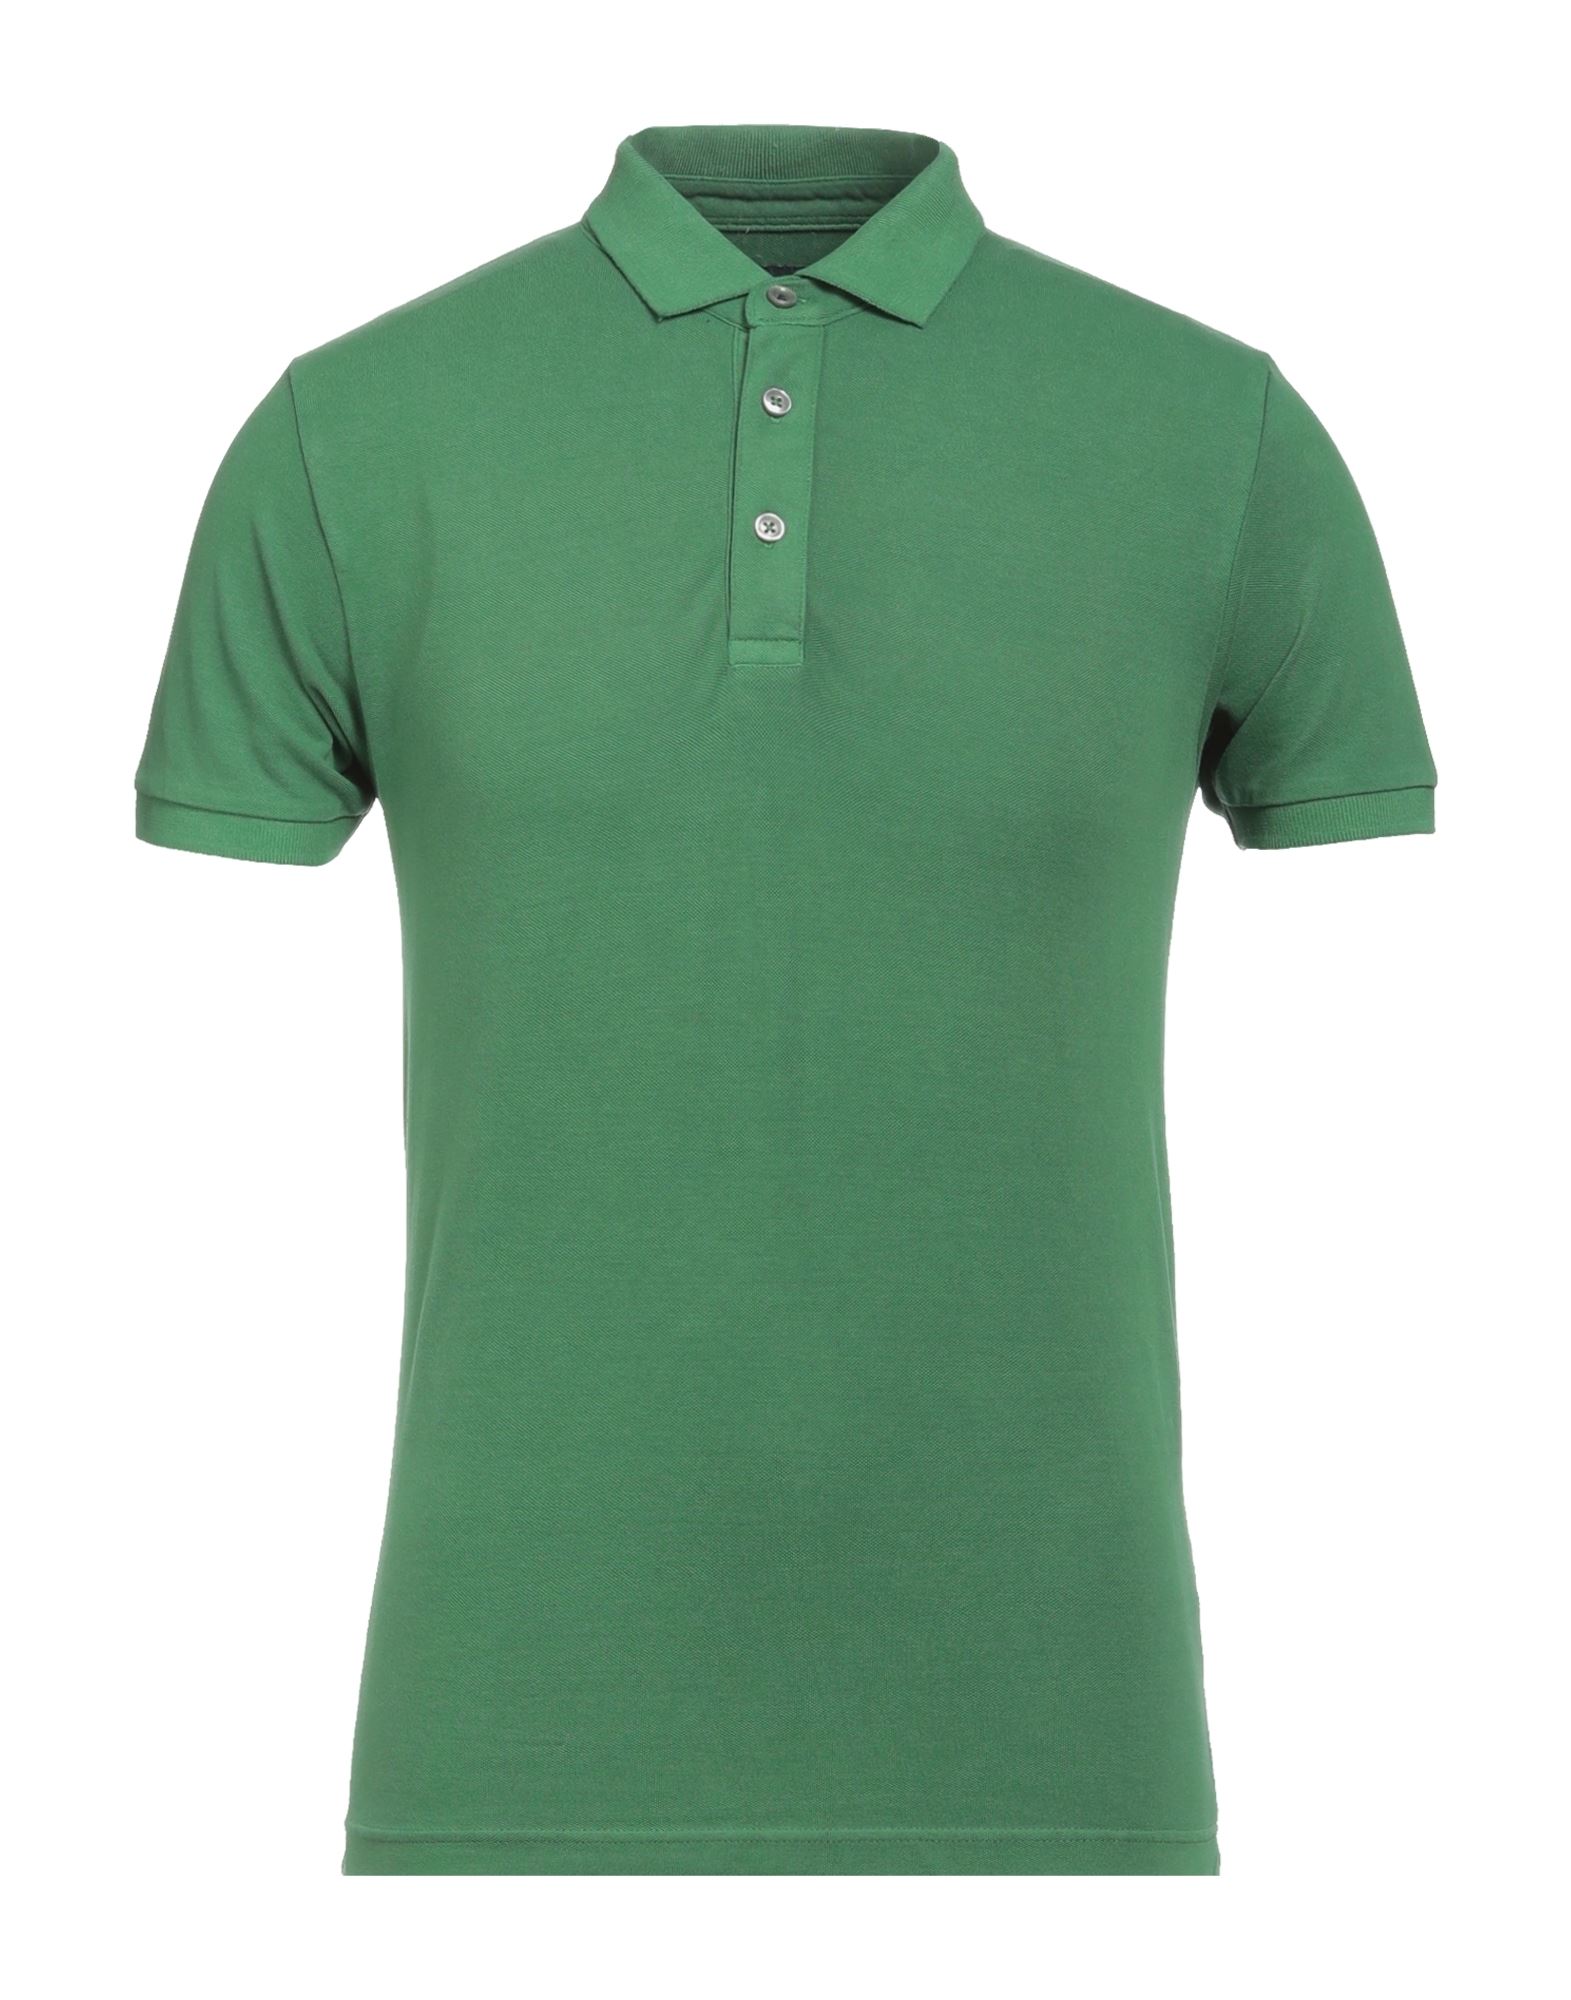 Homeward Clothes Polo Shirts In Green